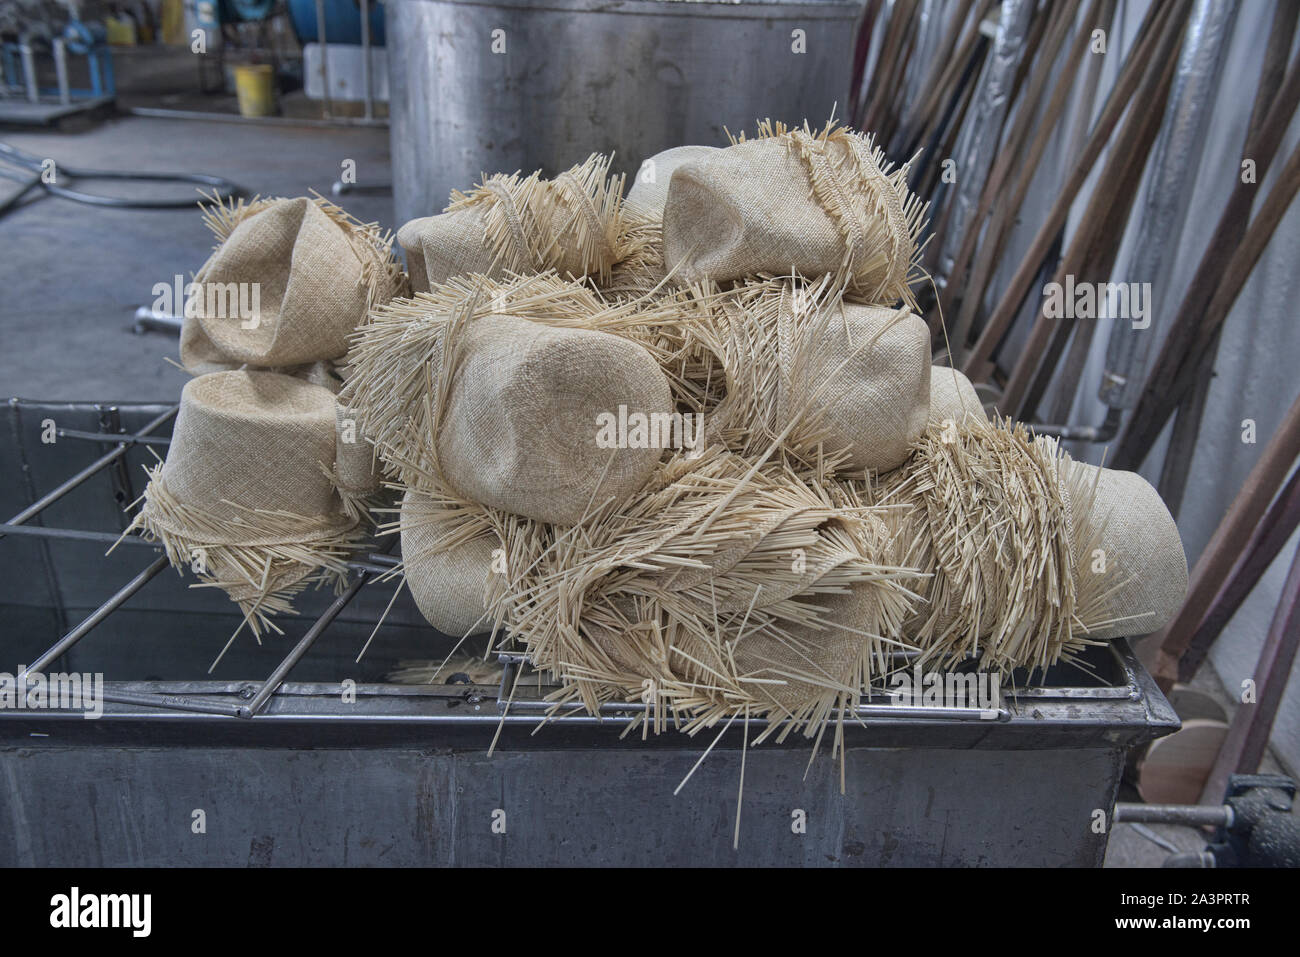 Scenes from a Panama hat (paja toquilla) factory in Cuenca, Ecuador Stock Photo